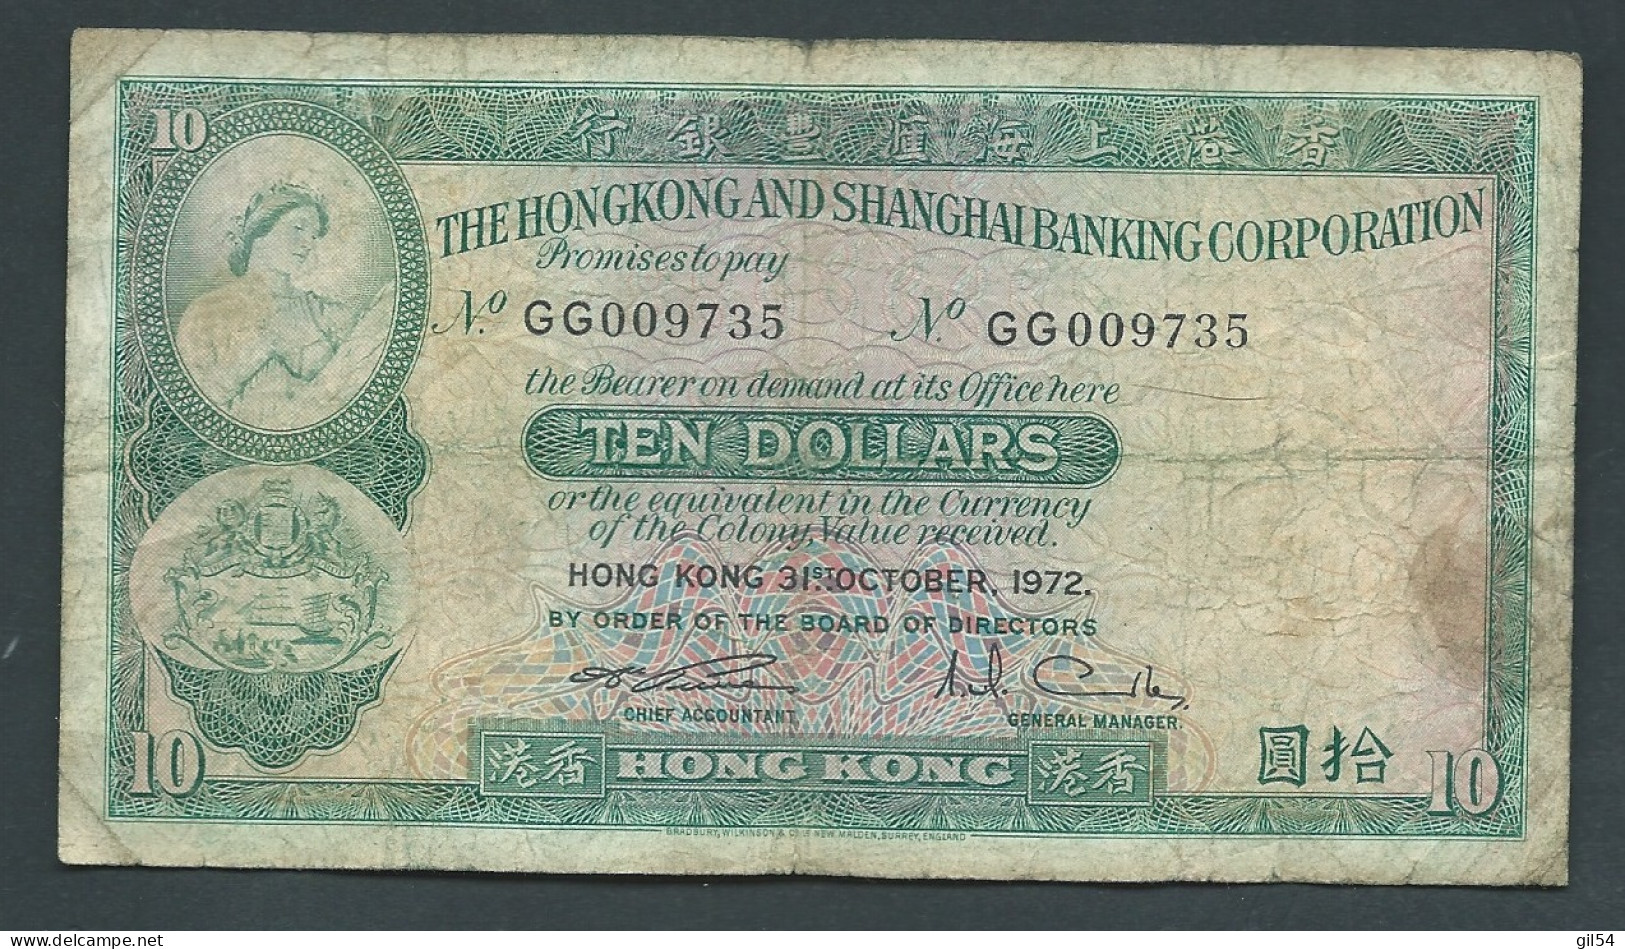 Billet, HONG KONG 1972 HSBC 10 Dollars - GG009735- Laura 10710 - Hong Kong